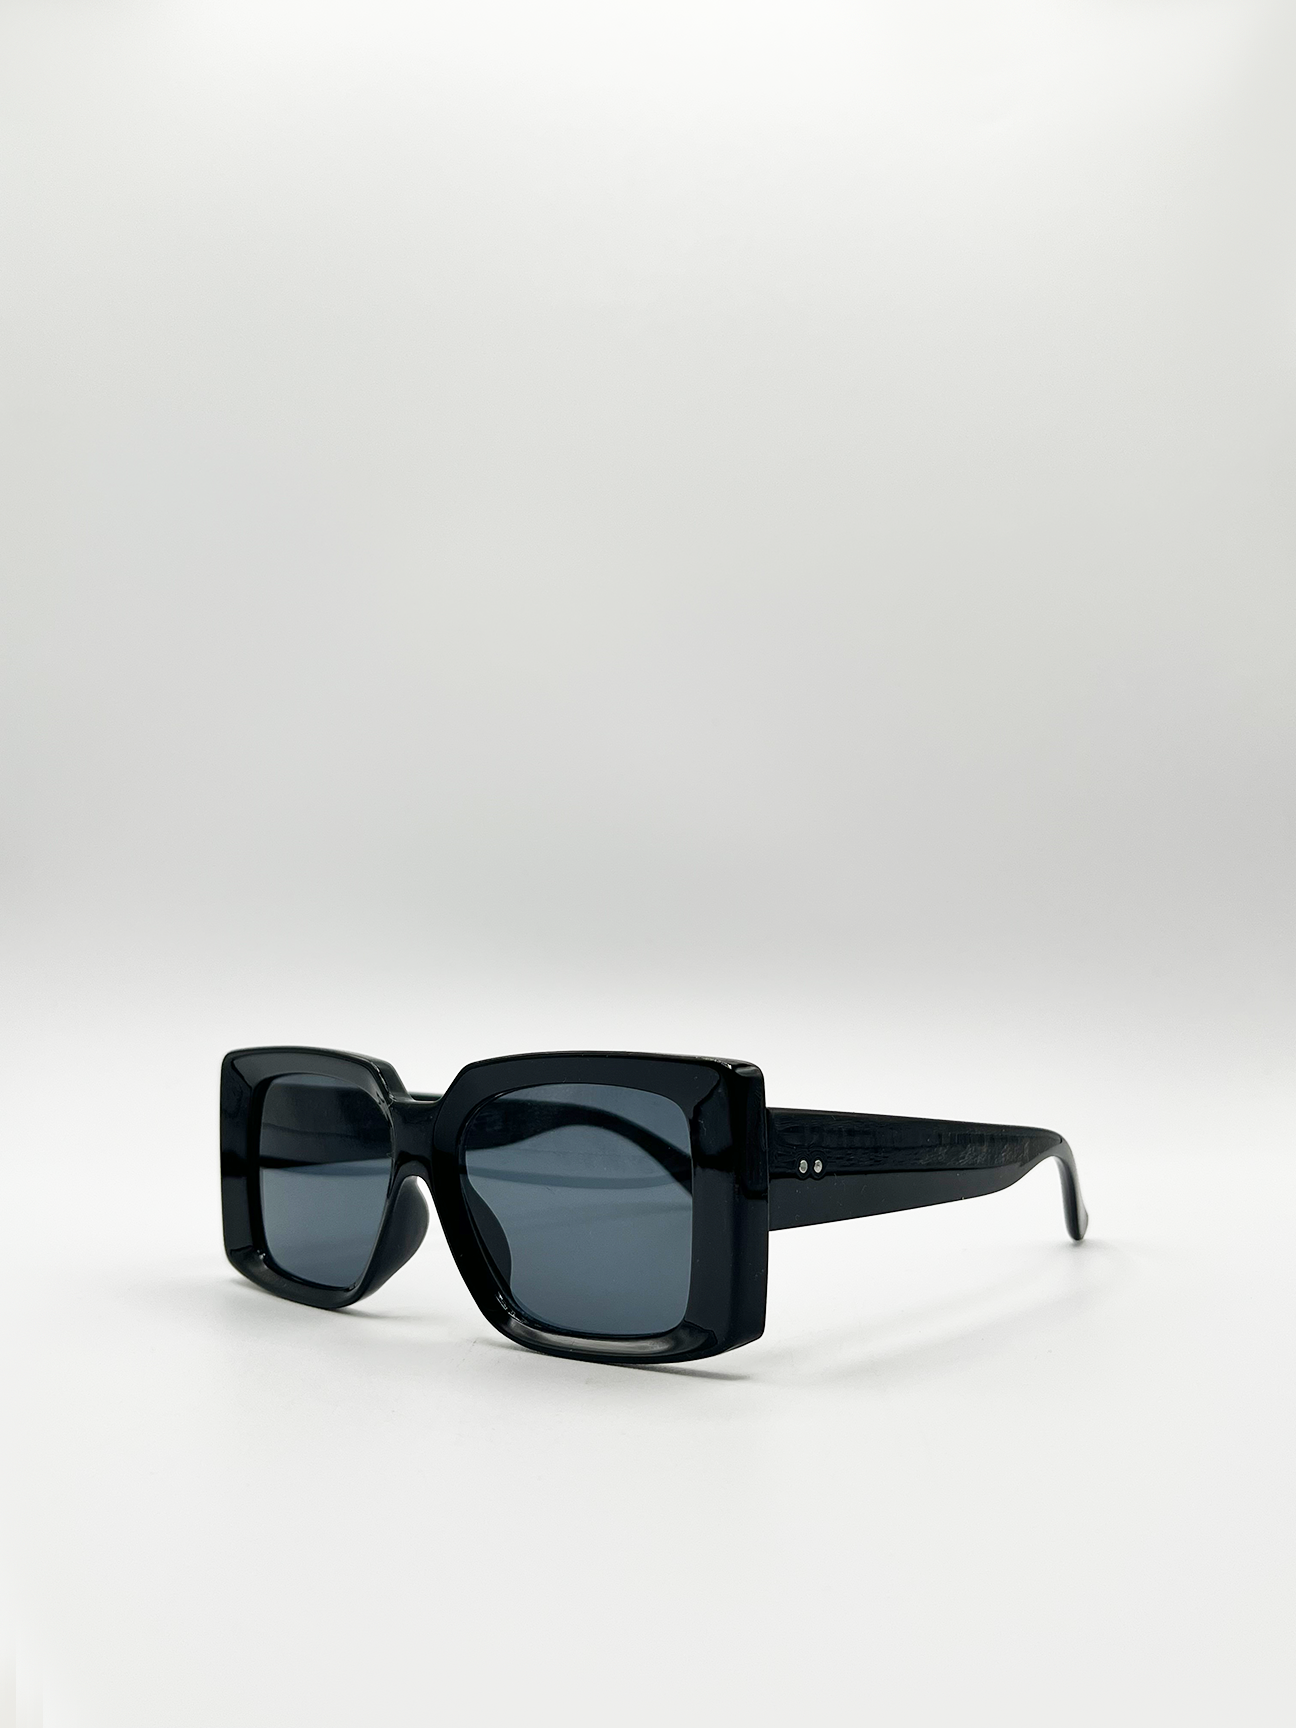 Black Oversized Square Sunglasses with Black Lenses